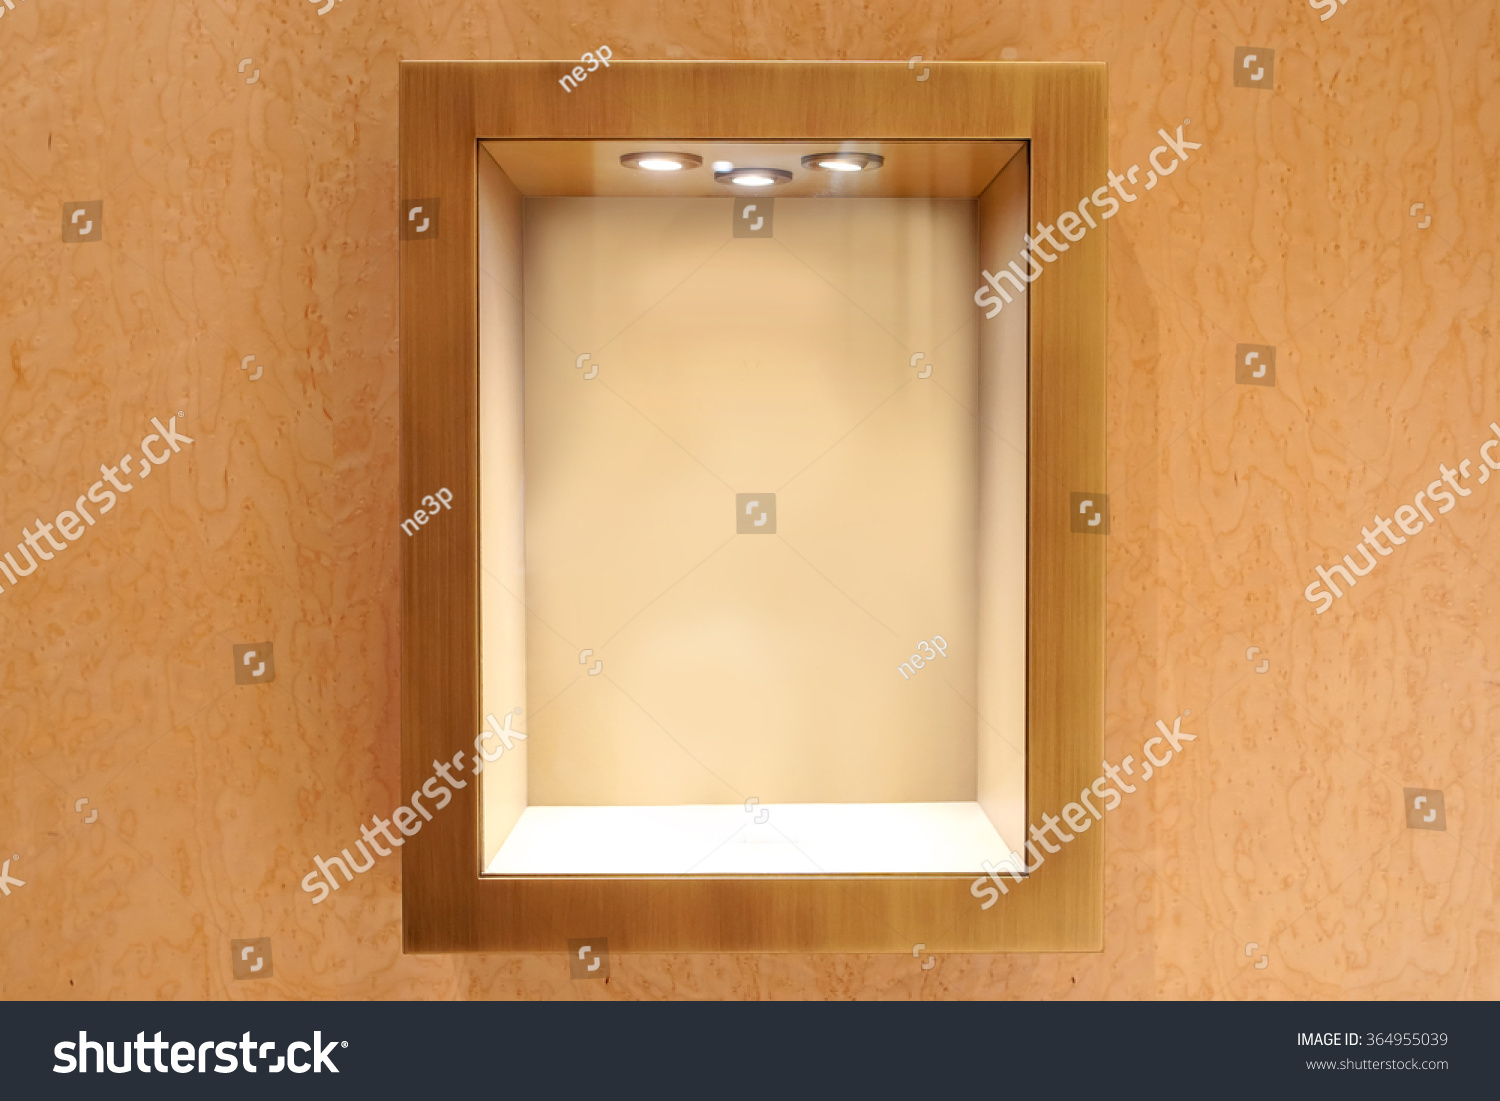 Neat wooden Empty glass showcase display #364955039